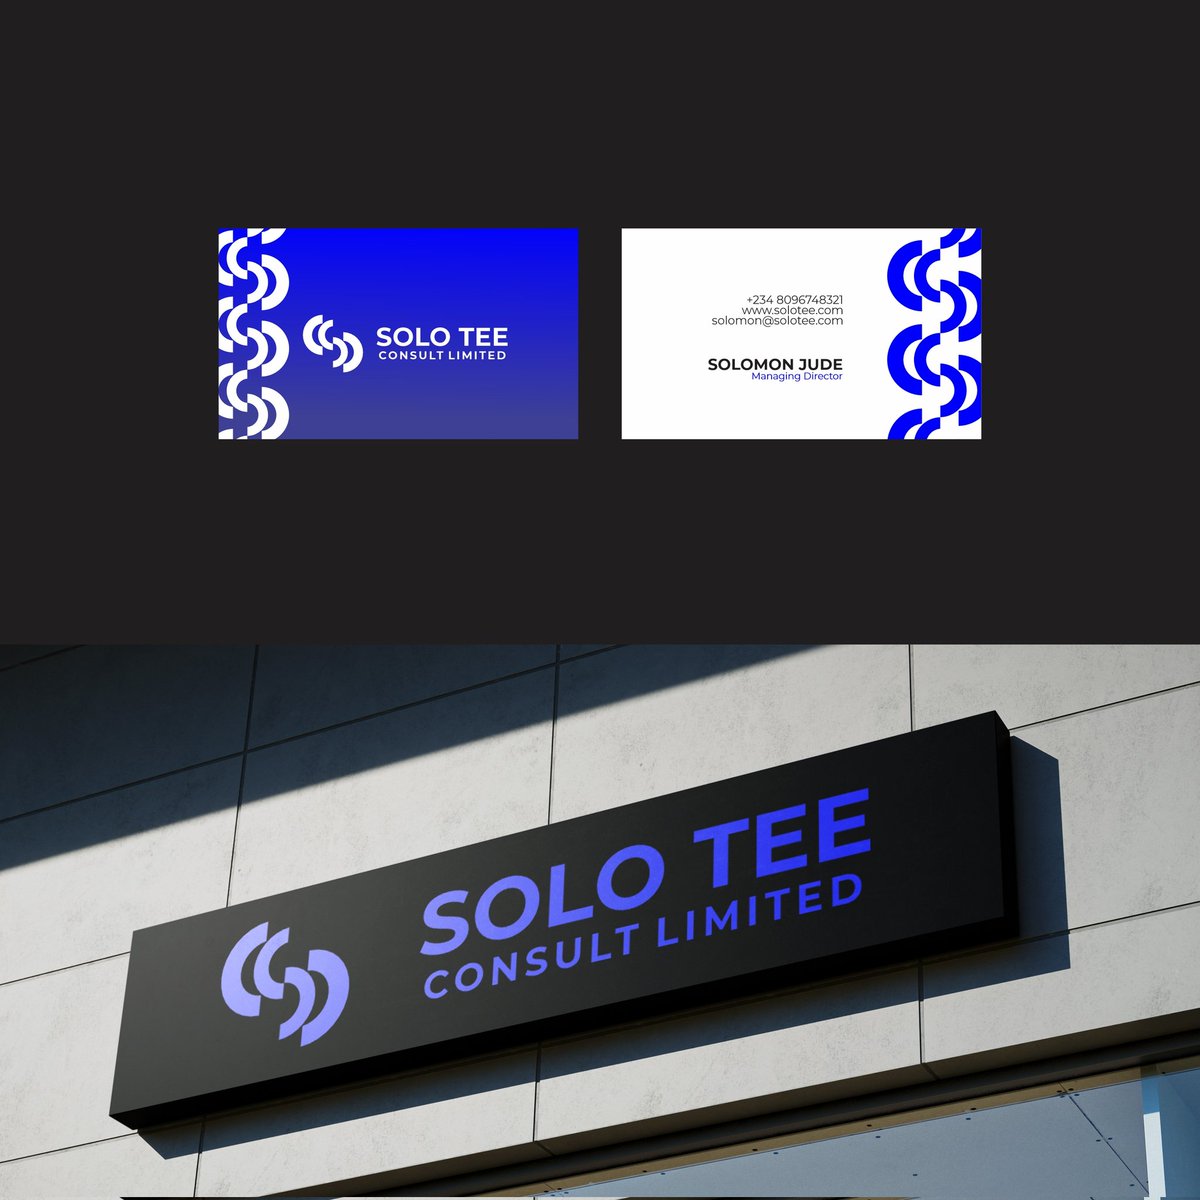 Brand Identity Design
Client: Solo Tee Consult Limited

#logodesign #logotype #branding #brandidentity